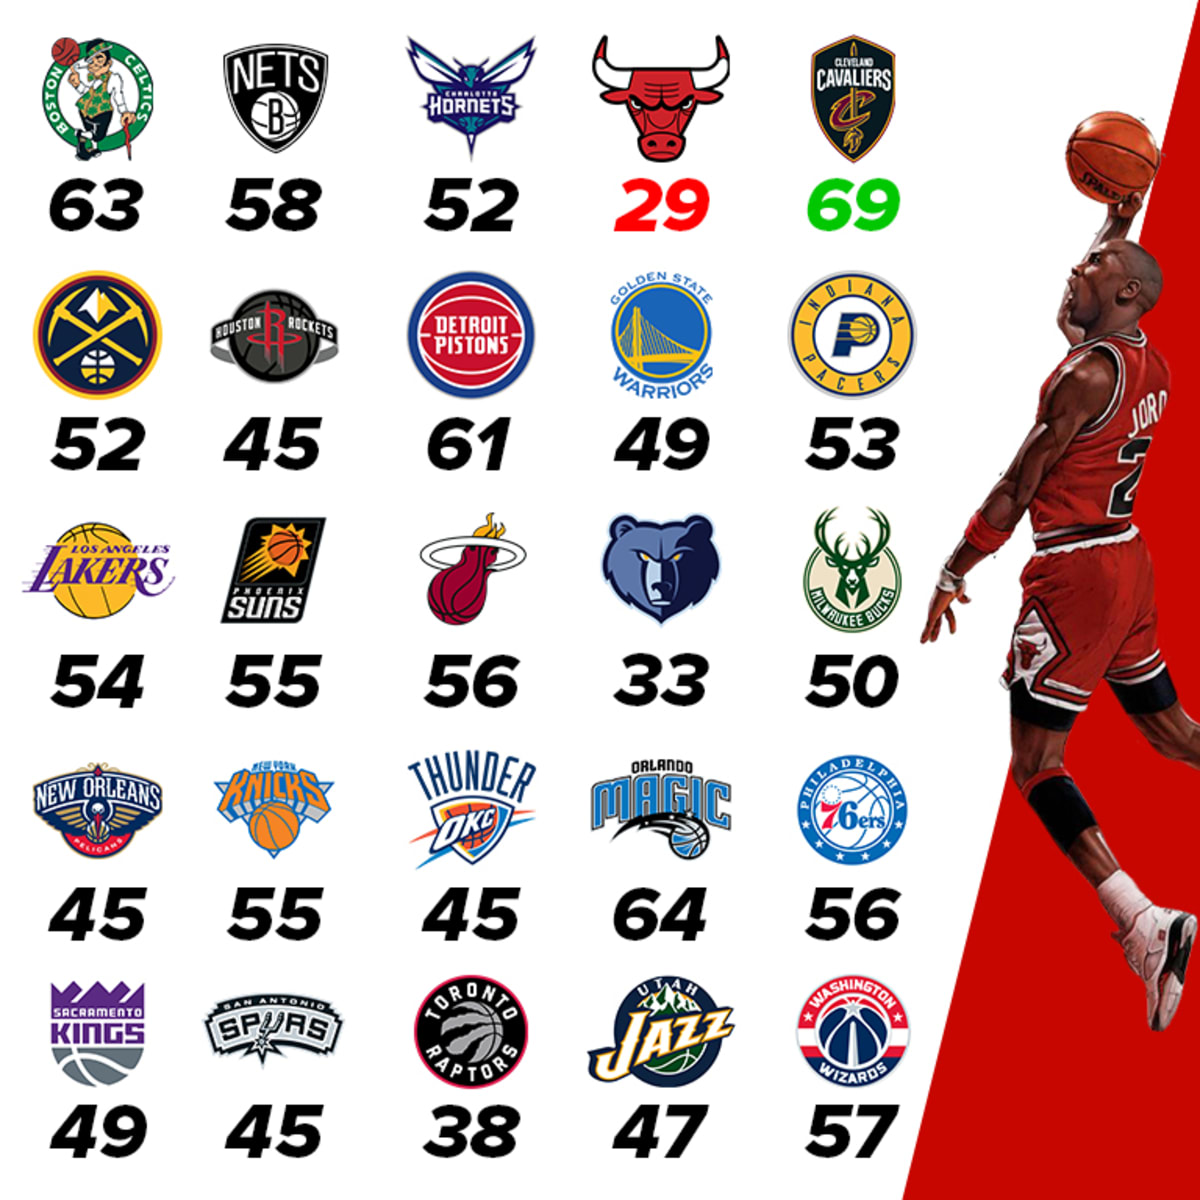 Bulls vs. Pistons - 1996 (Michael Jordan 53 points) 